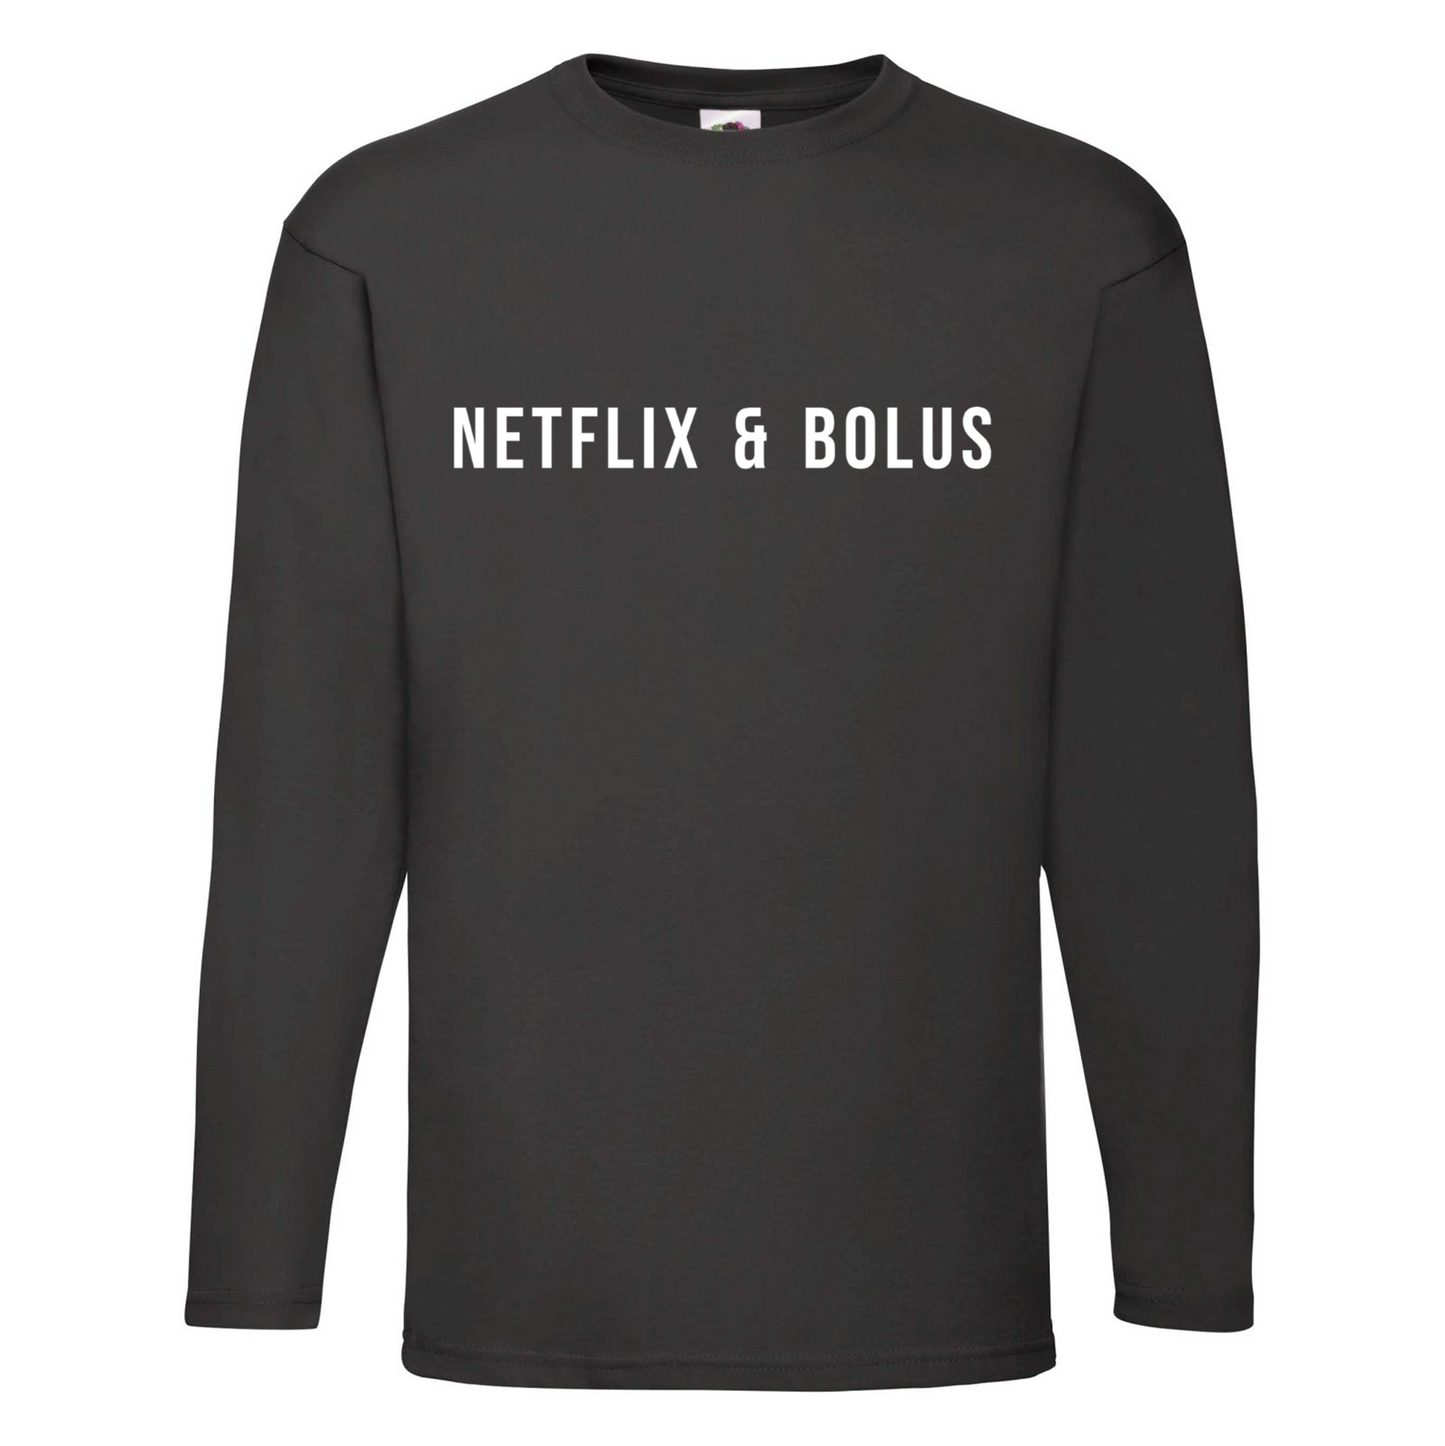 Netflix & Bolus Long Sleeve T Shirt